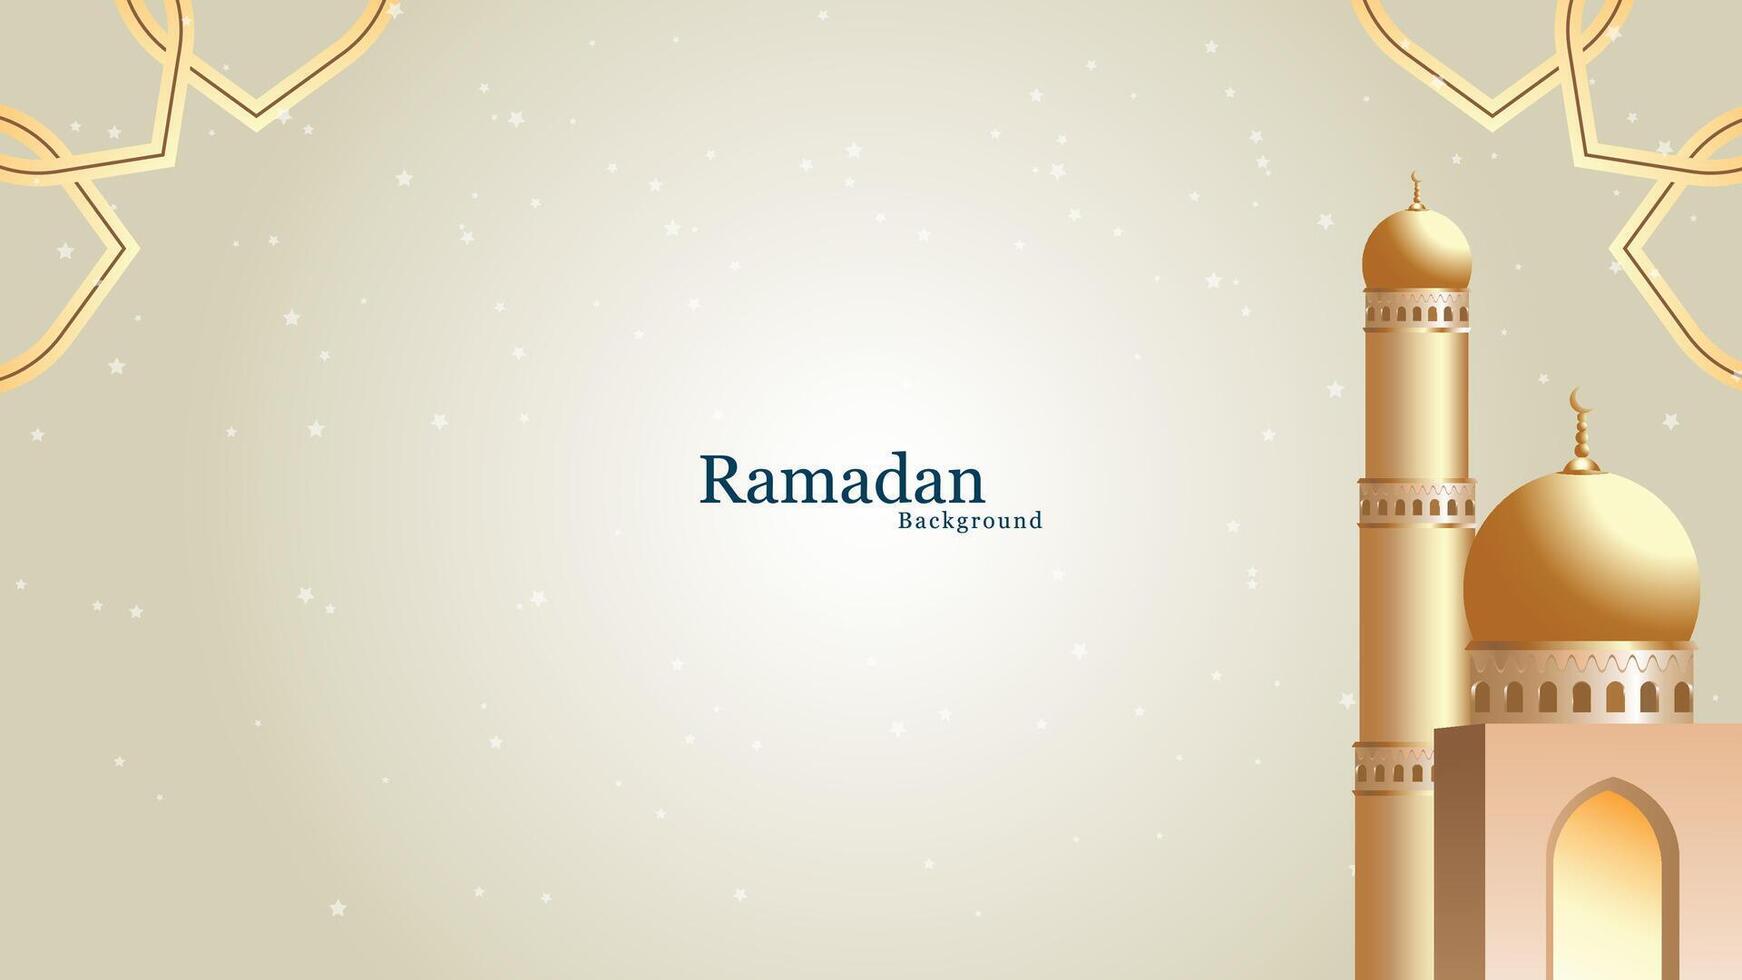 Ramadan kareem vector illustration, ramadan holiday celebration background